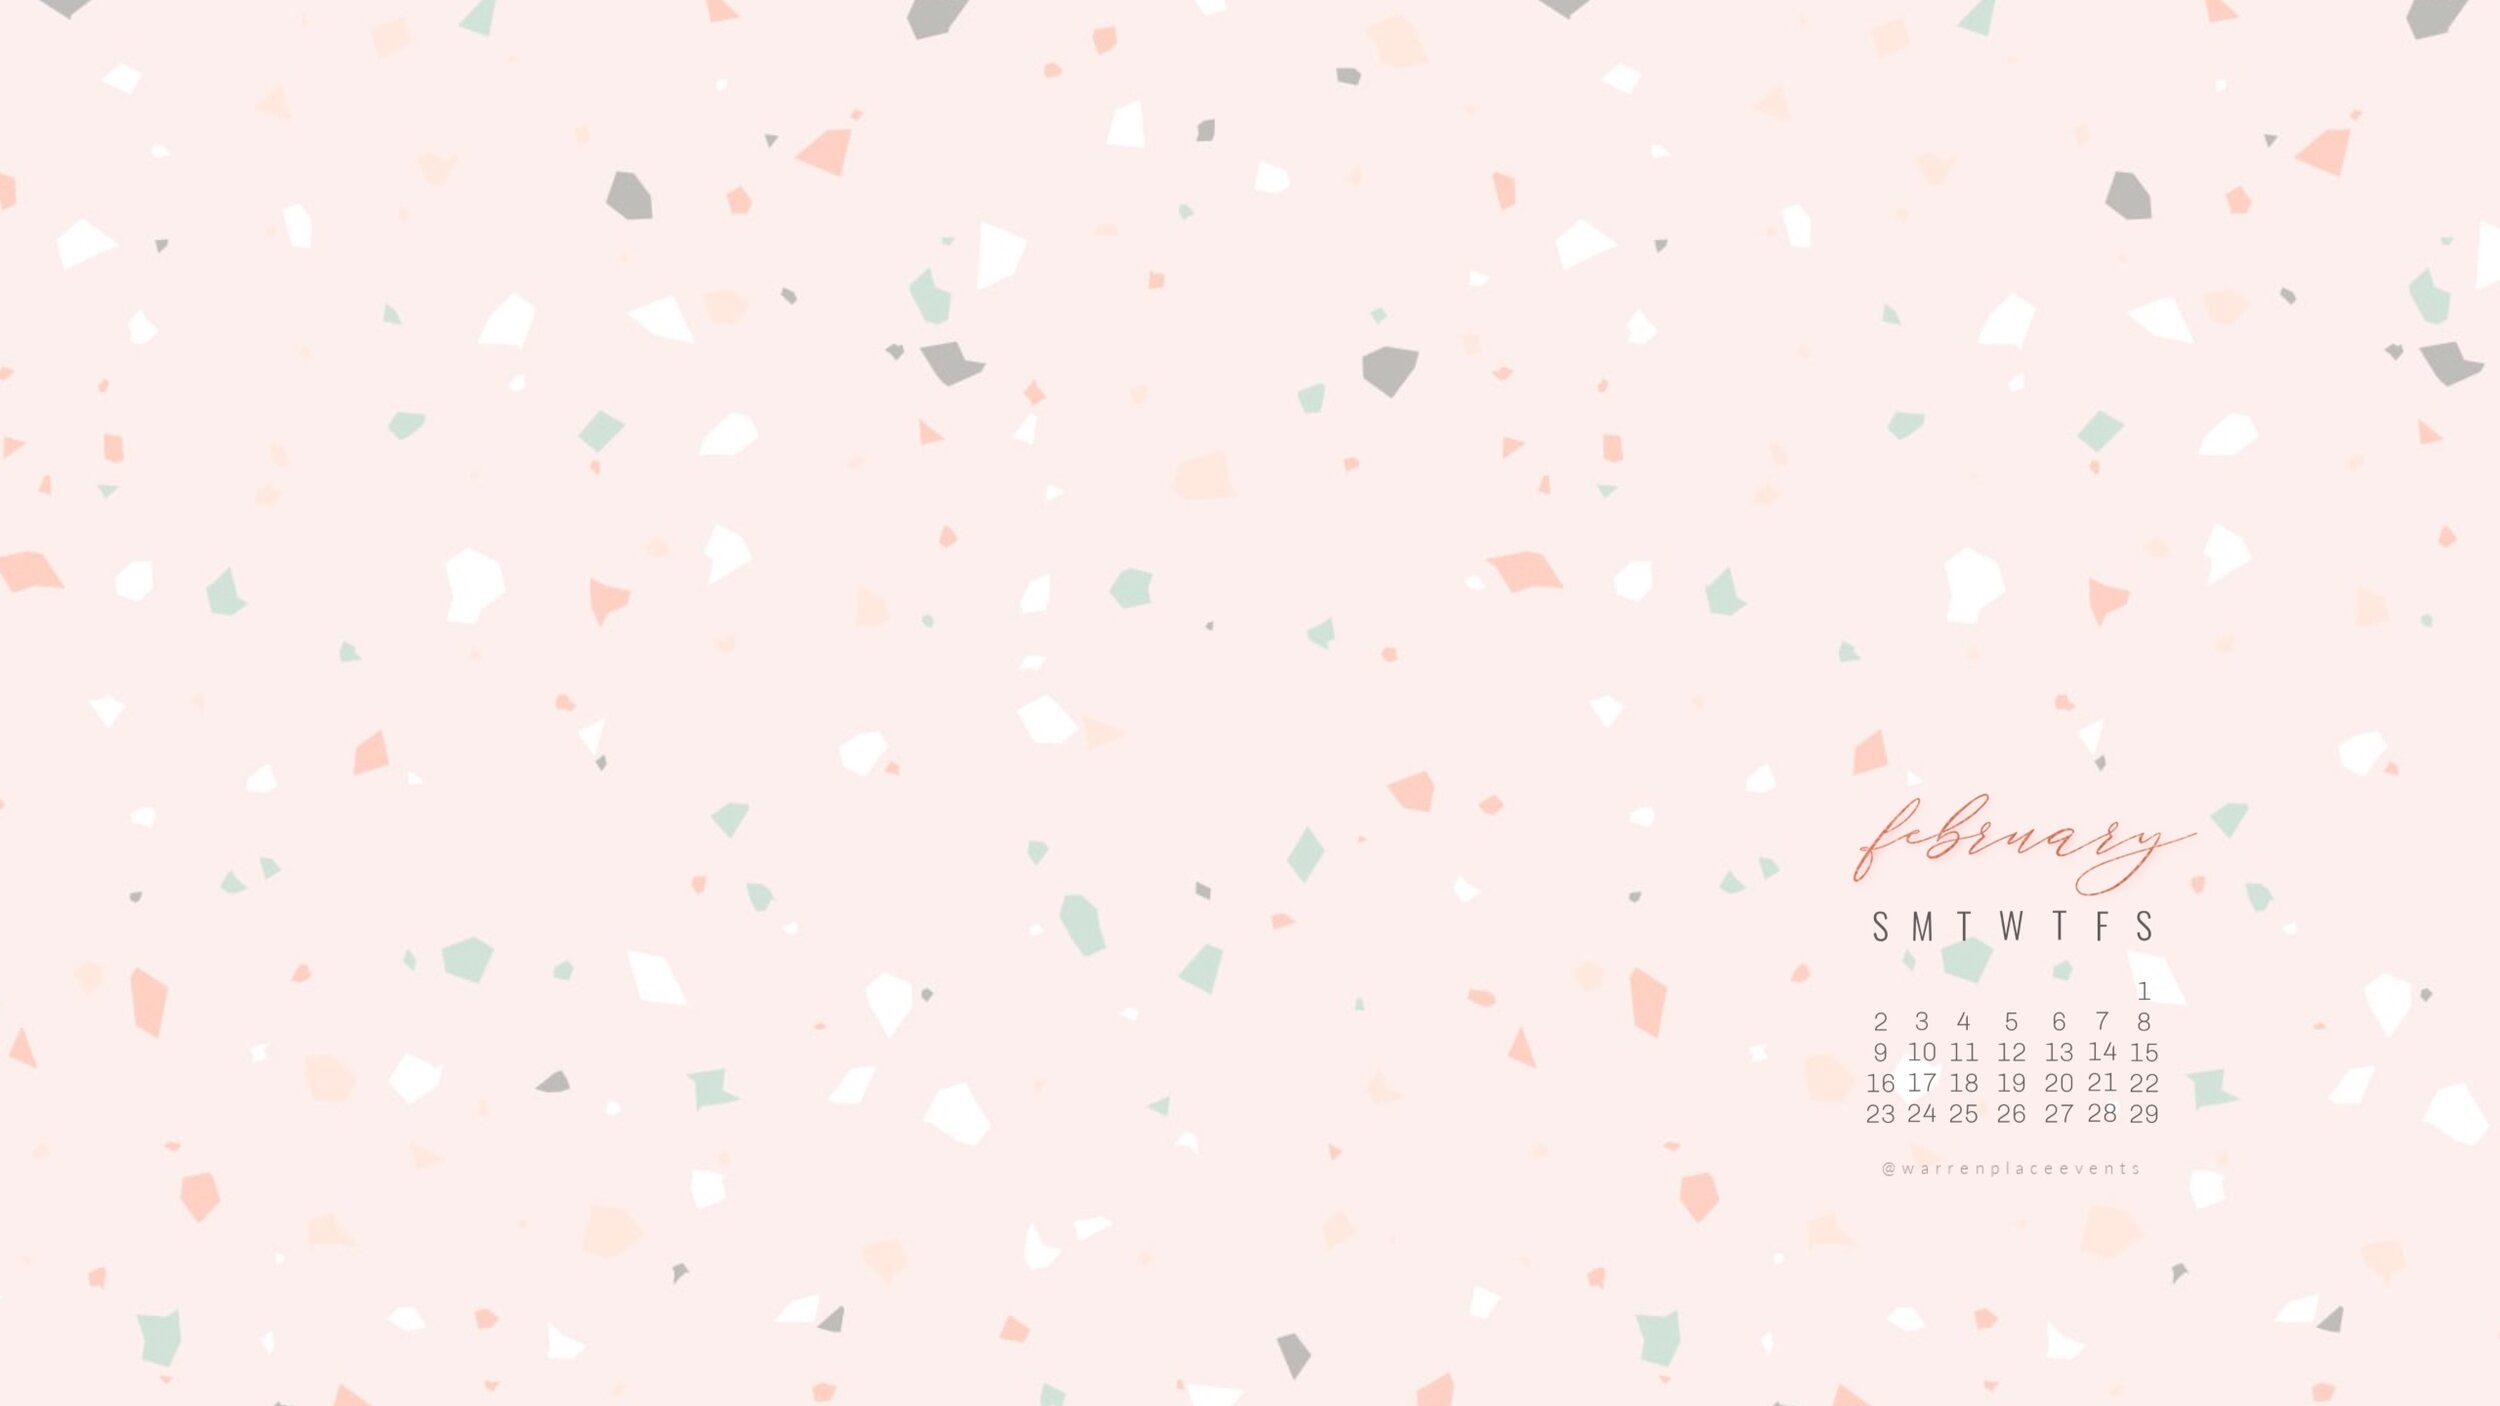 Wallpaper In 2020, Cute Patterns Wallpaper, Pink